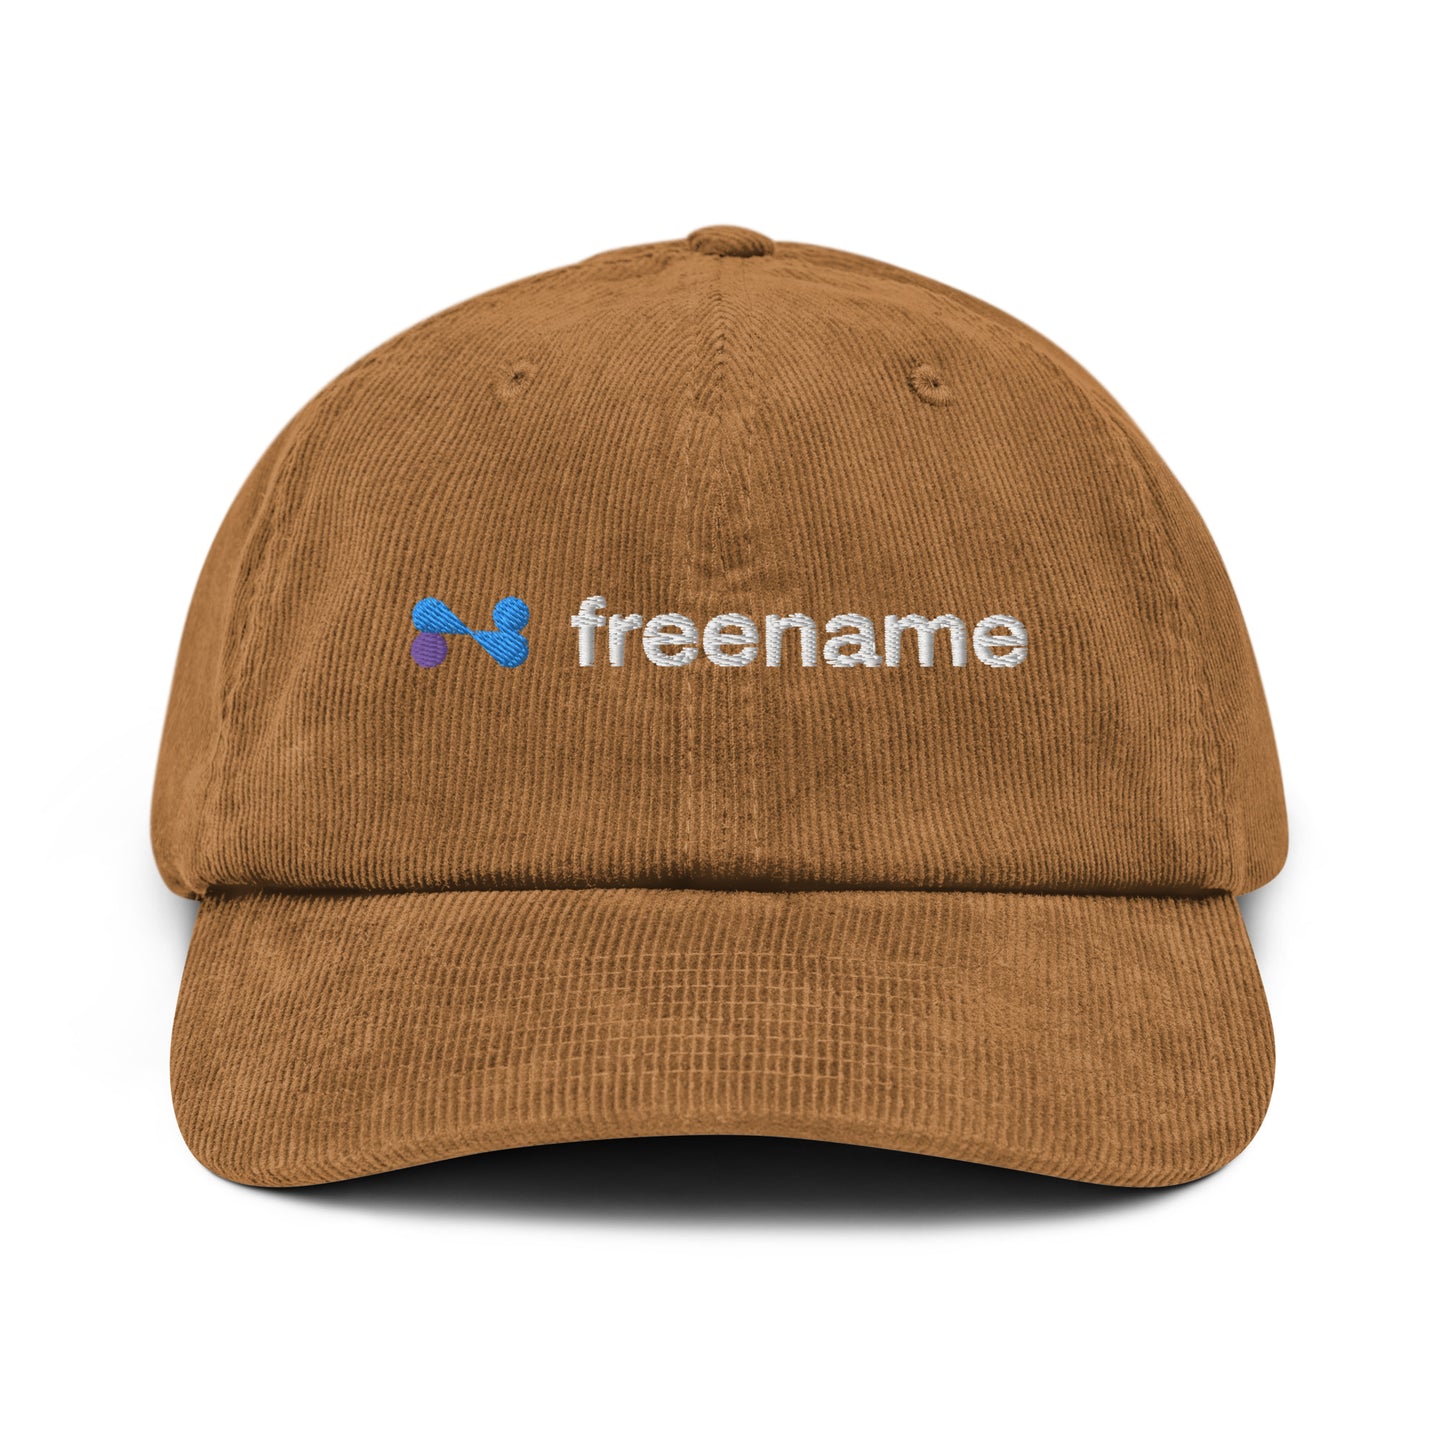 Freename - Corduroy hat